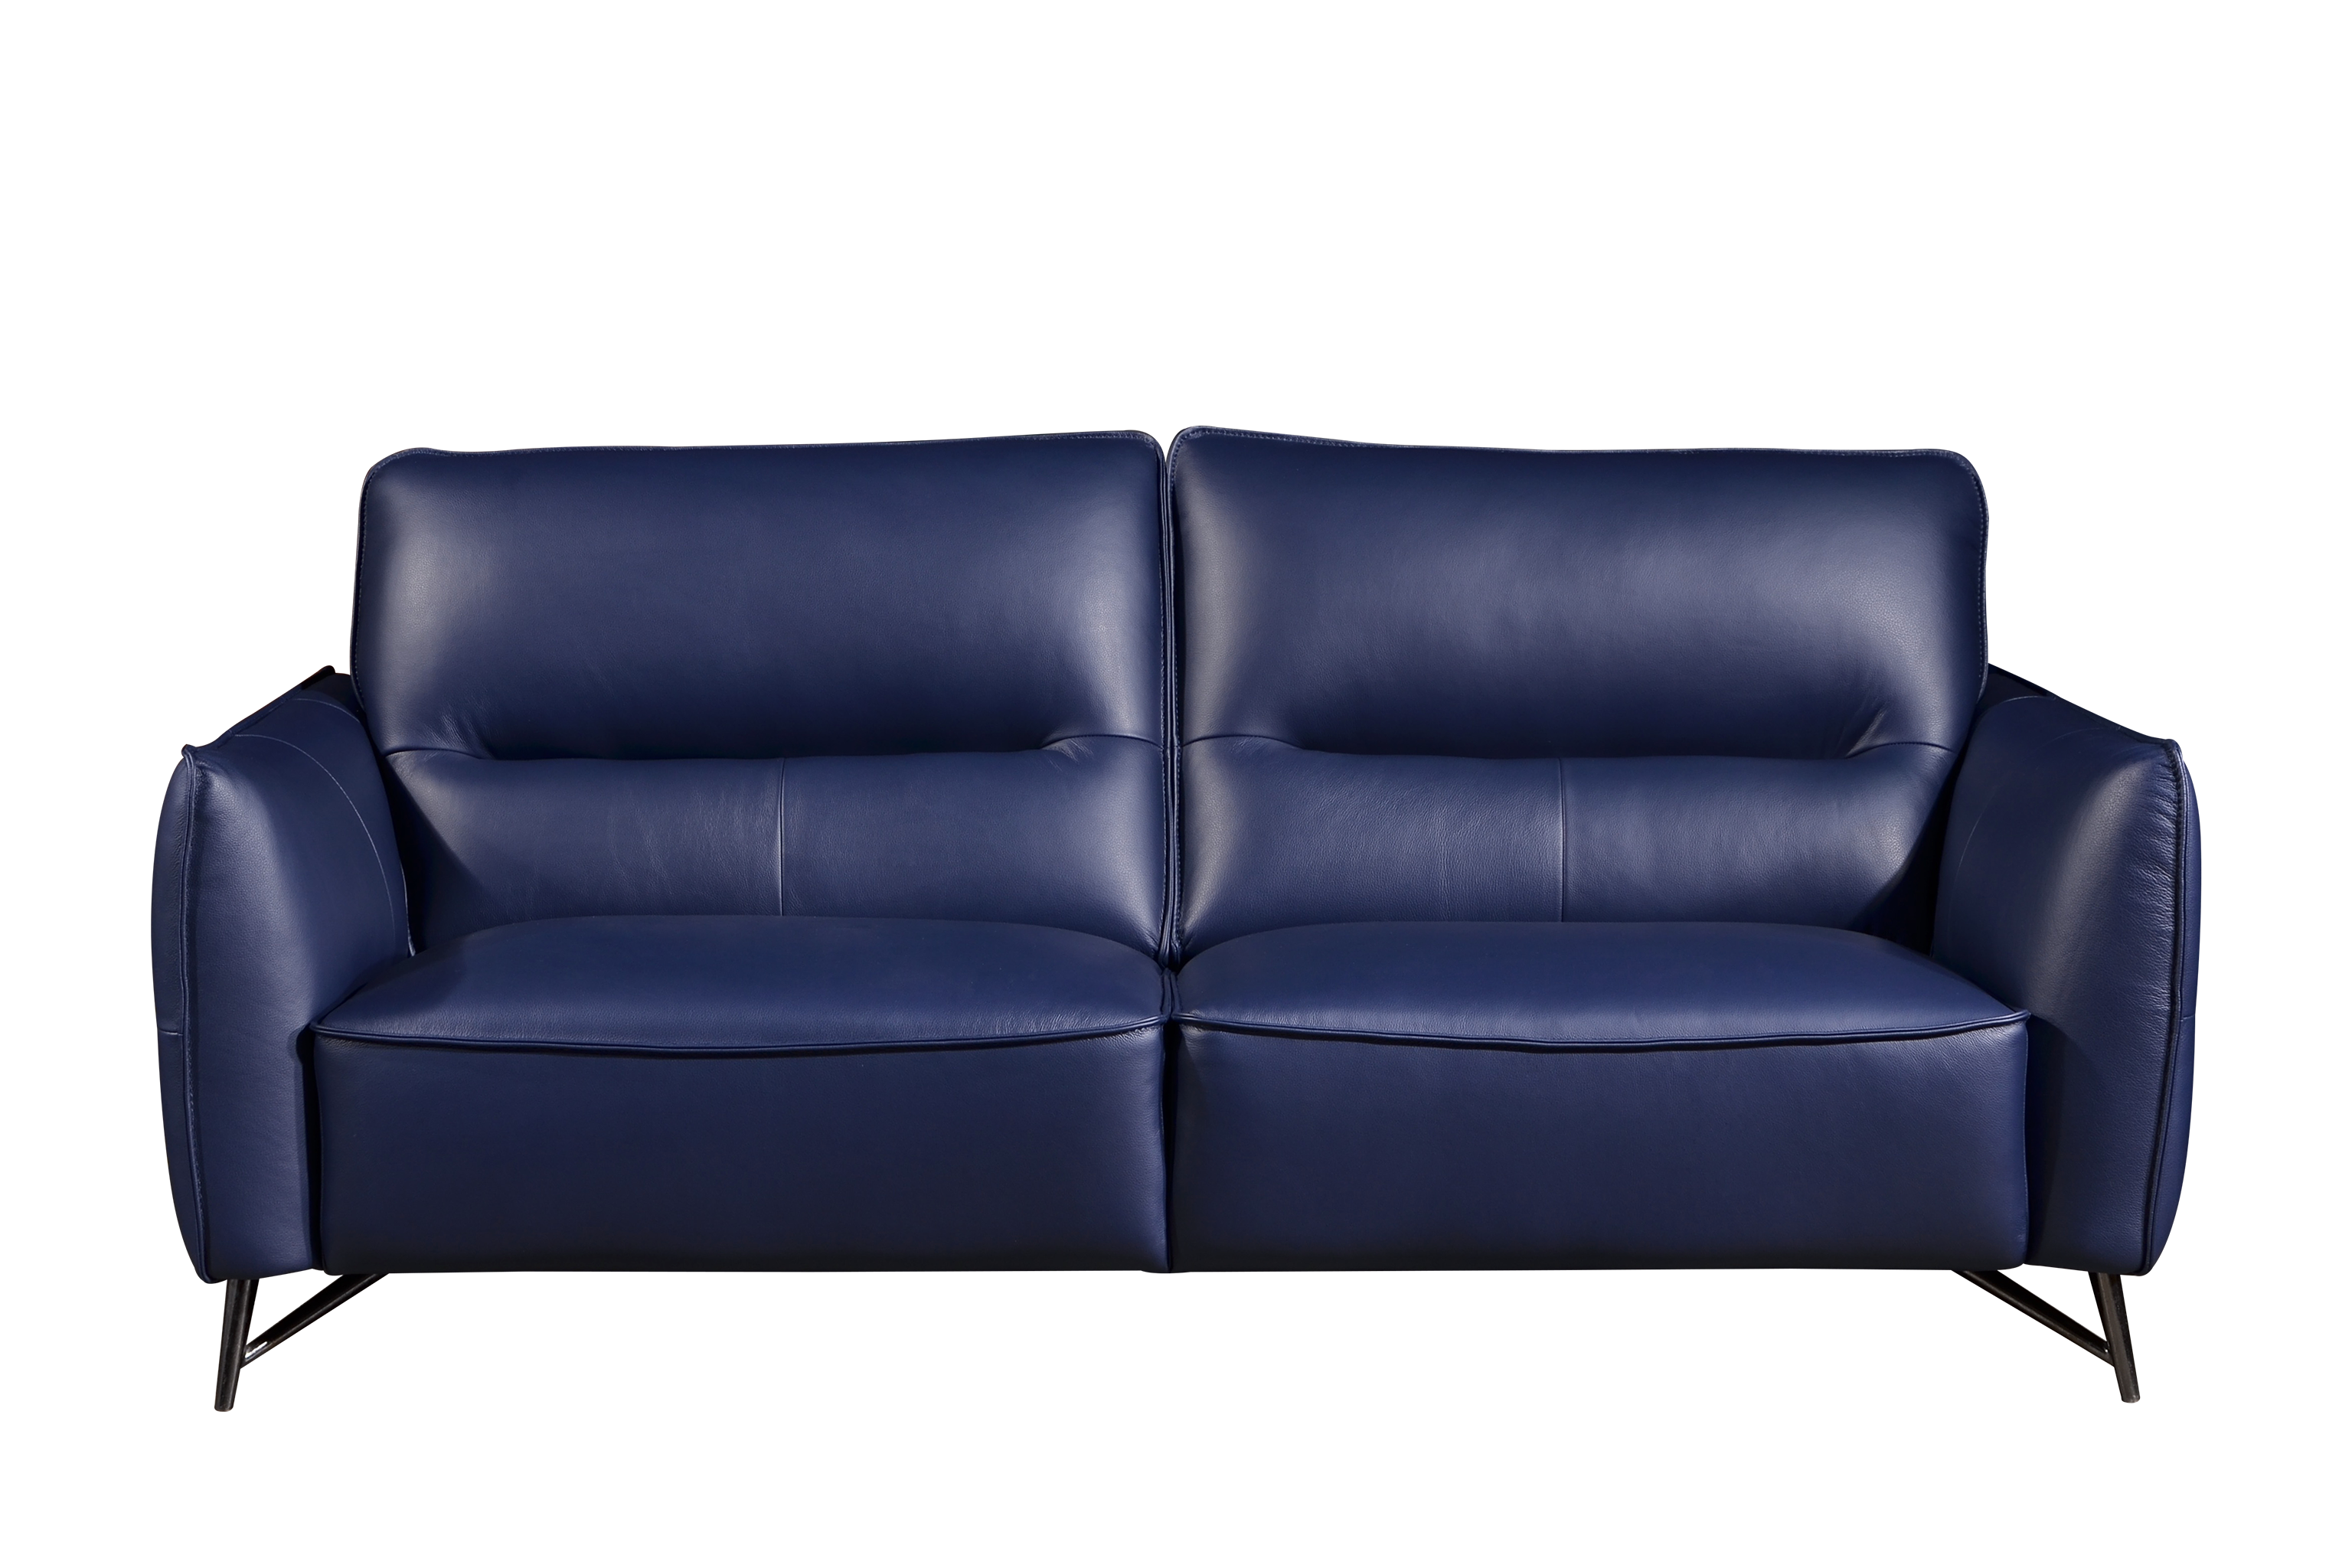 SORENA 2.5 Seater Sofa In Leather By Castilla